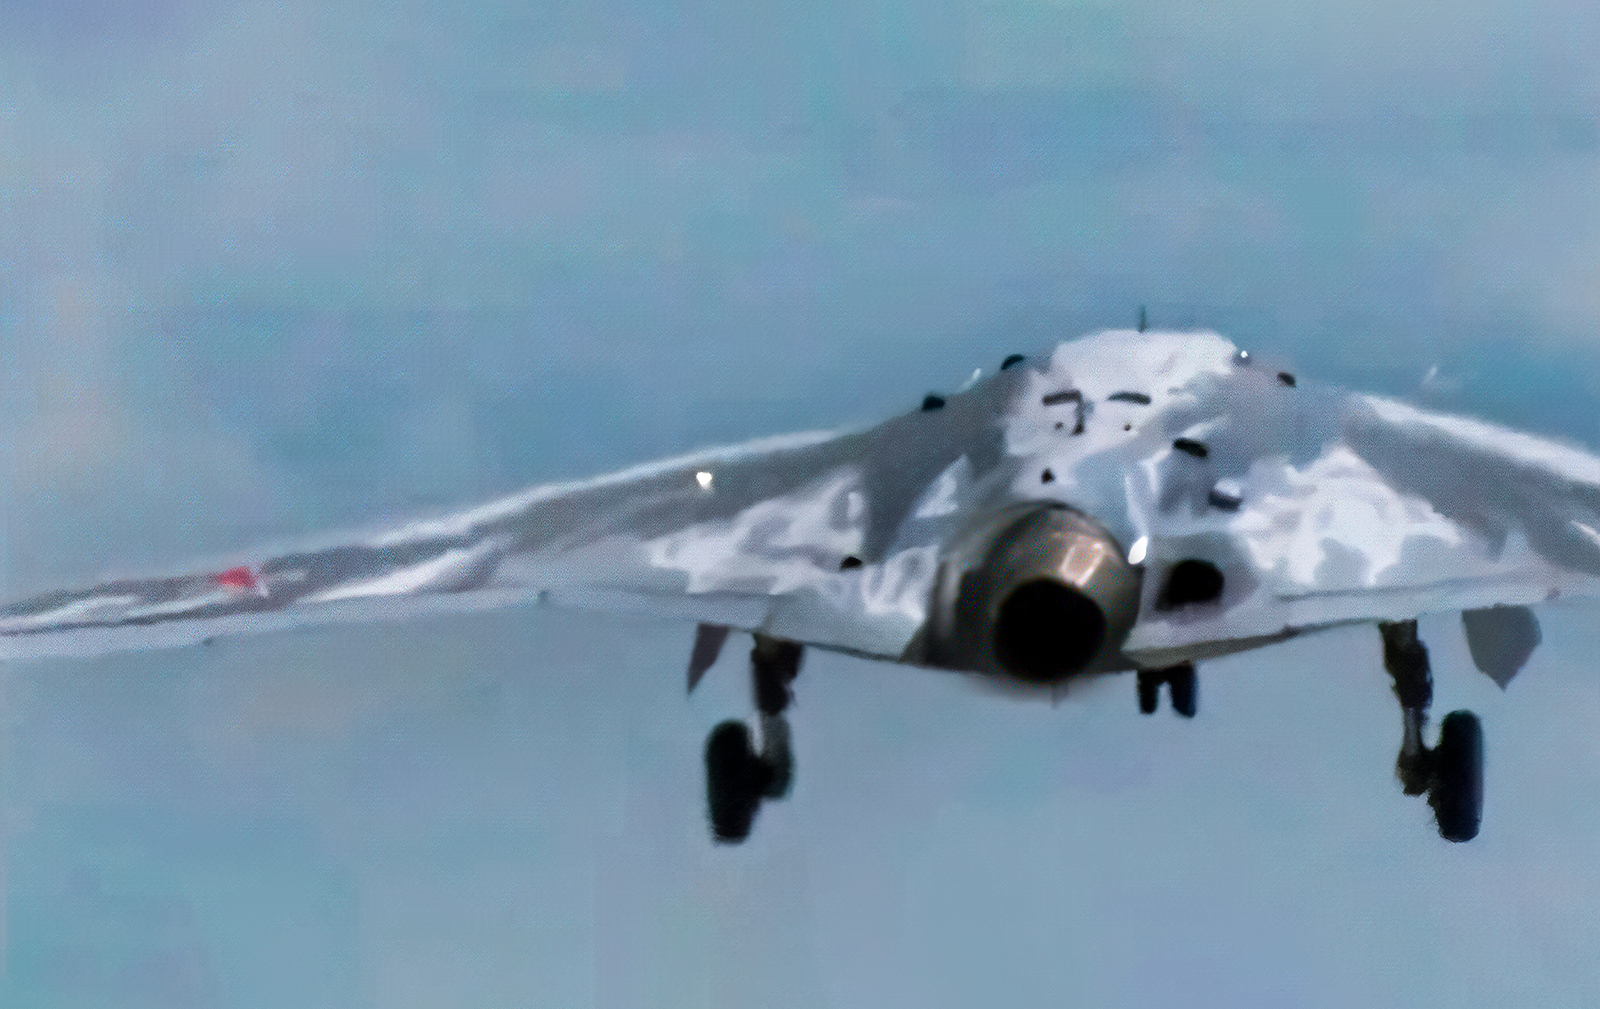 S-70 Okhotnik-B: Putin tiene ahora drones furtivos